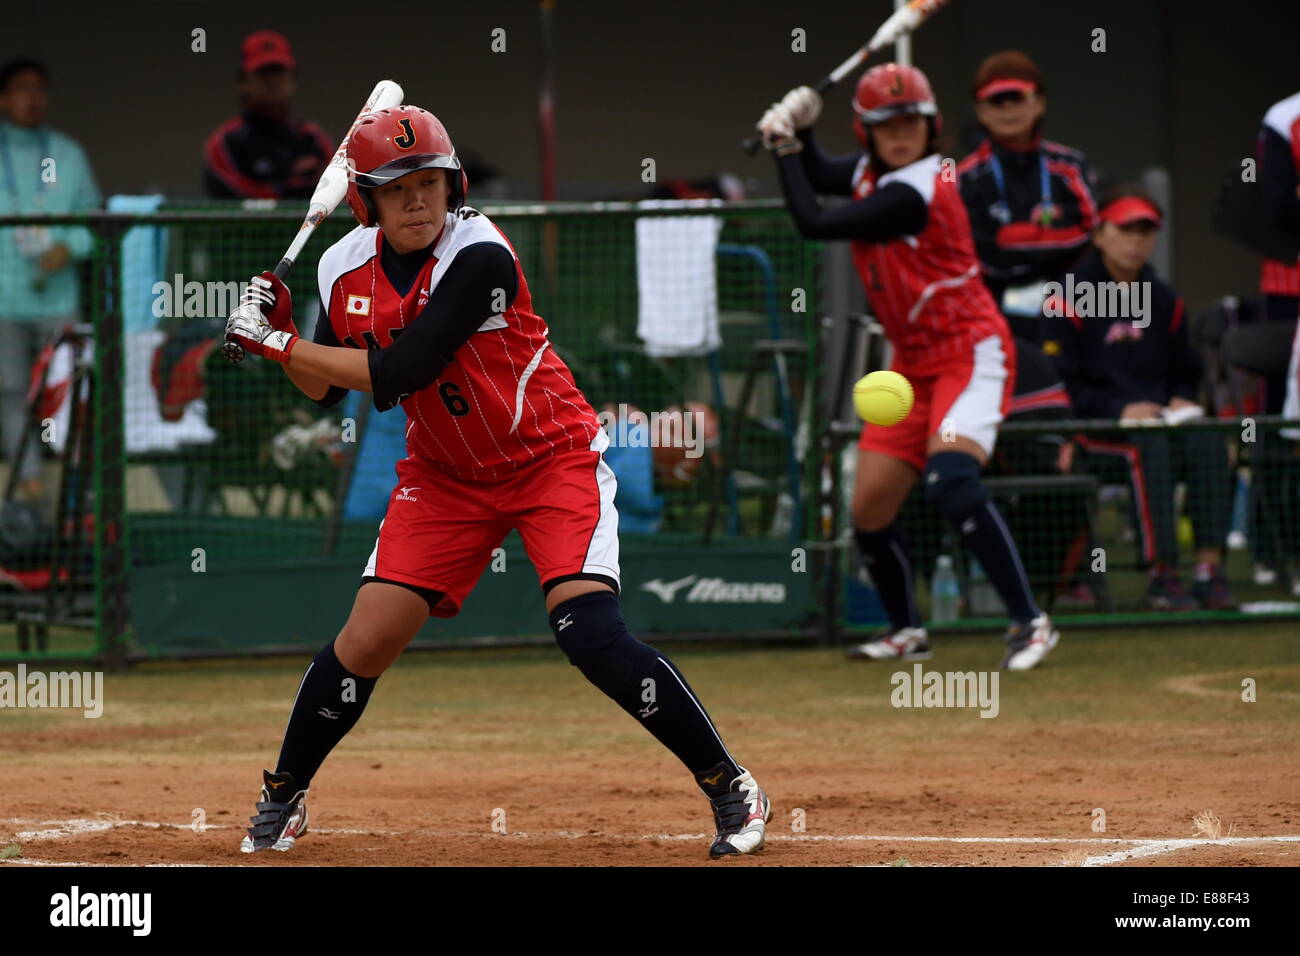 (141002) -- INCHEON, Oct. 2, 2014 (Xinhua) -- Sakamoto Haruna of Japan hits the ball during the women's softball grand final match against Chinese Taipei at the 17th Asian Games in Incheon, South Korea, Oct. 2, 2014. Japan won 6-0 and claimed the title. (Xinhua/Gao Jianjun)(mcg) Stock Photo